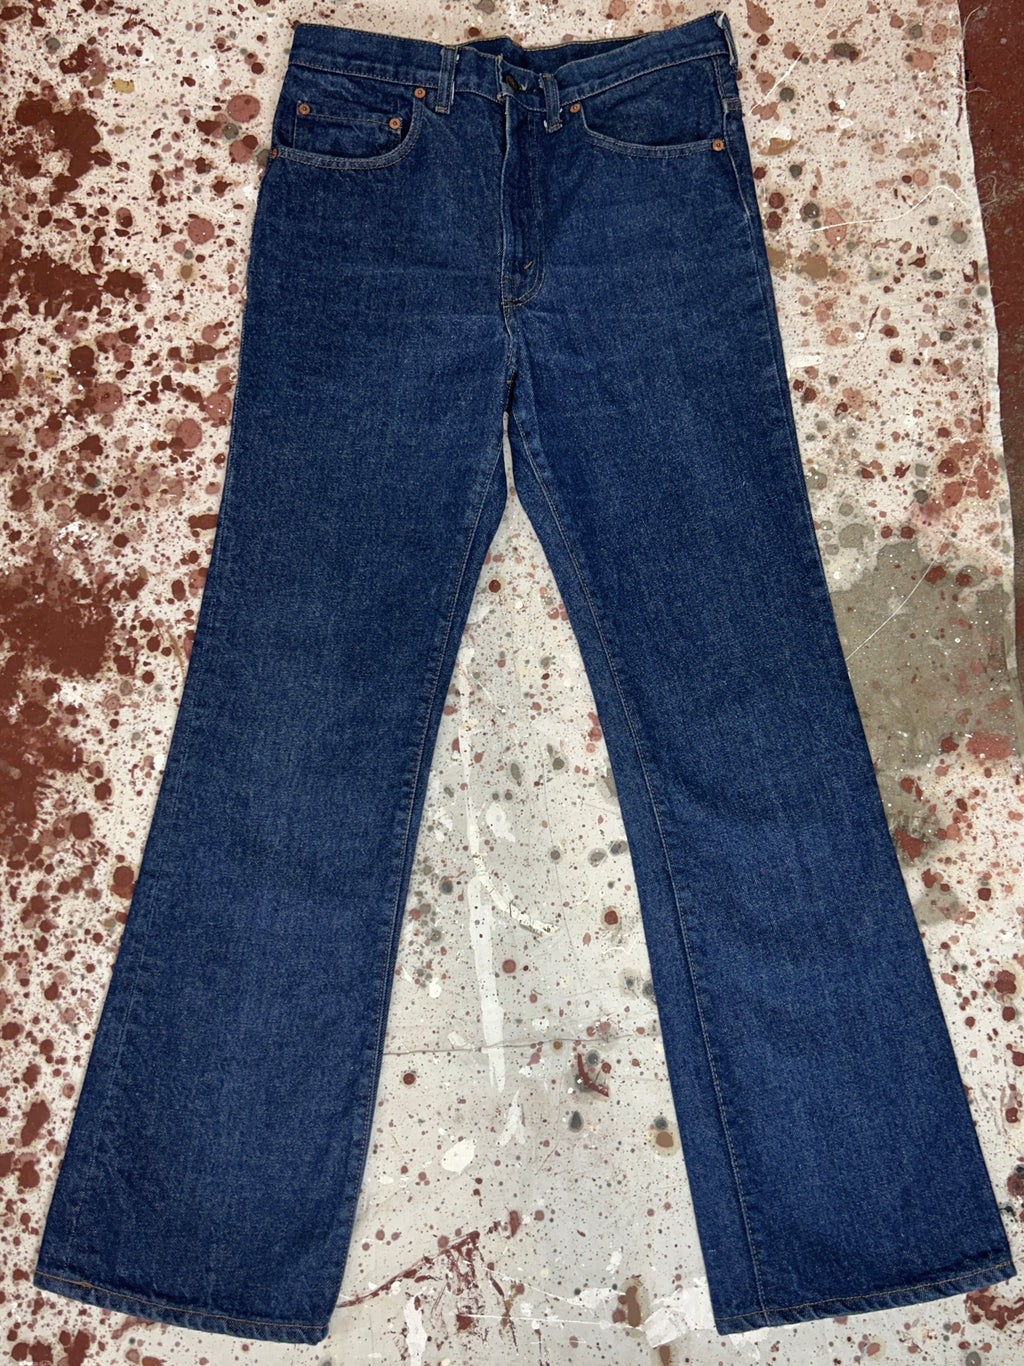 Vintage USA Levi's 517 Talon 42 Zip One-Wash Denim Jeans (JYJ0424-170)